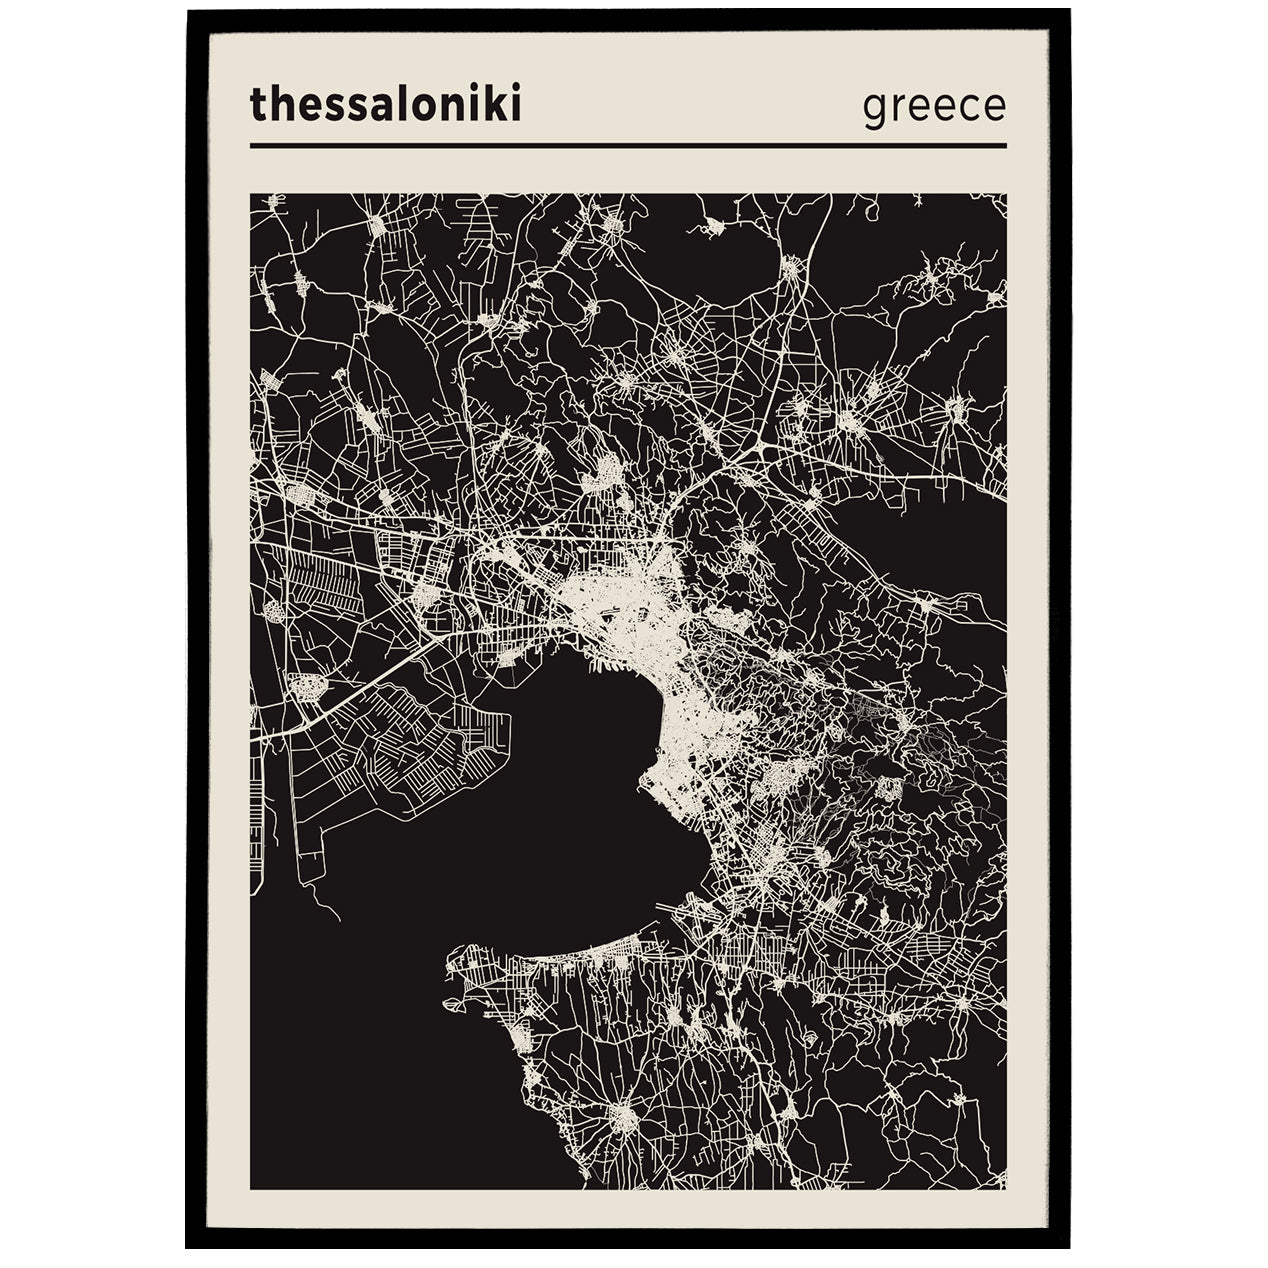 Thessaloniki, Greece - City Map Poster